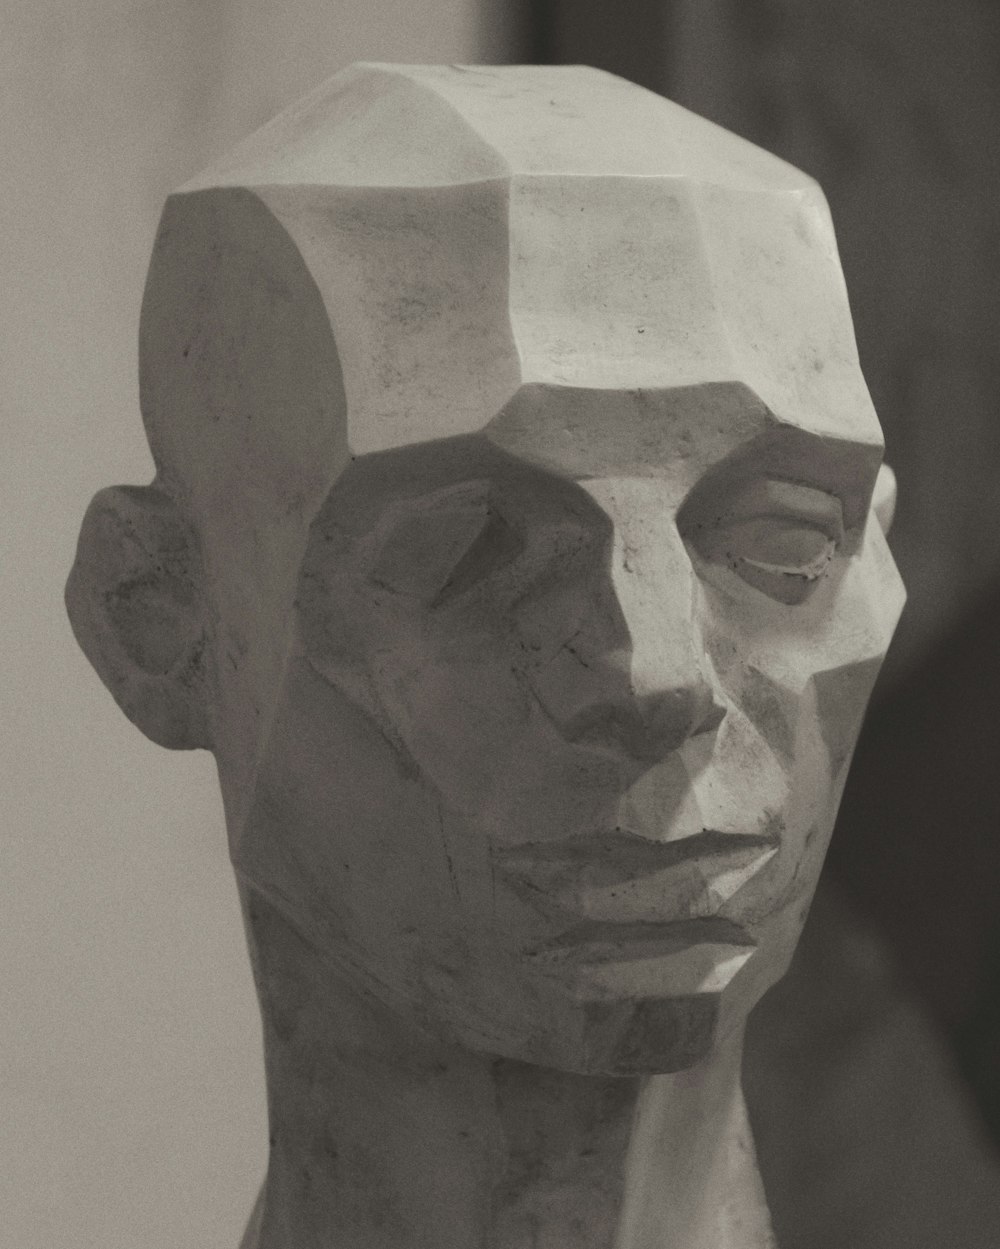 busto cinza da face do concreto na superfície branca